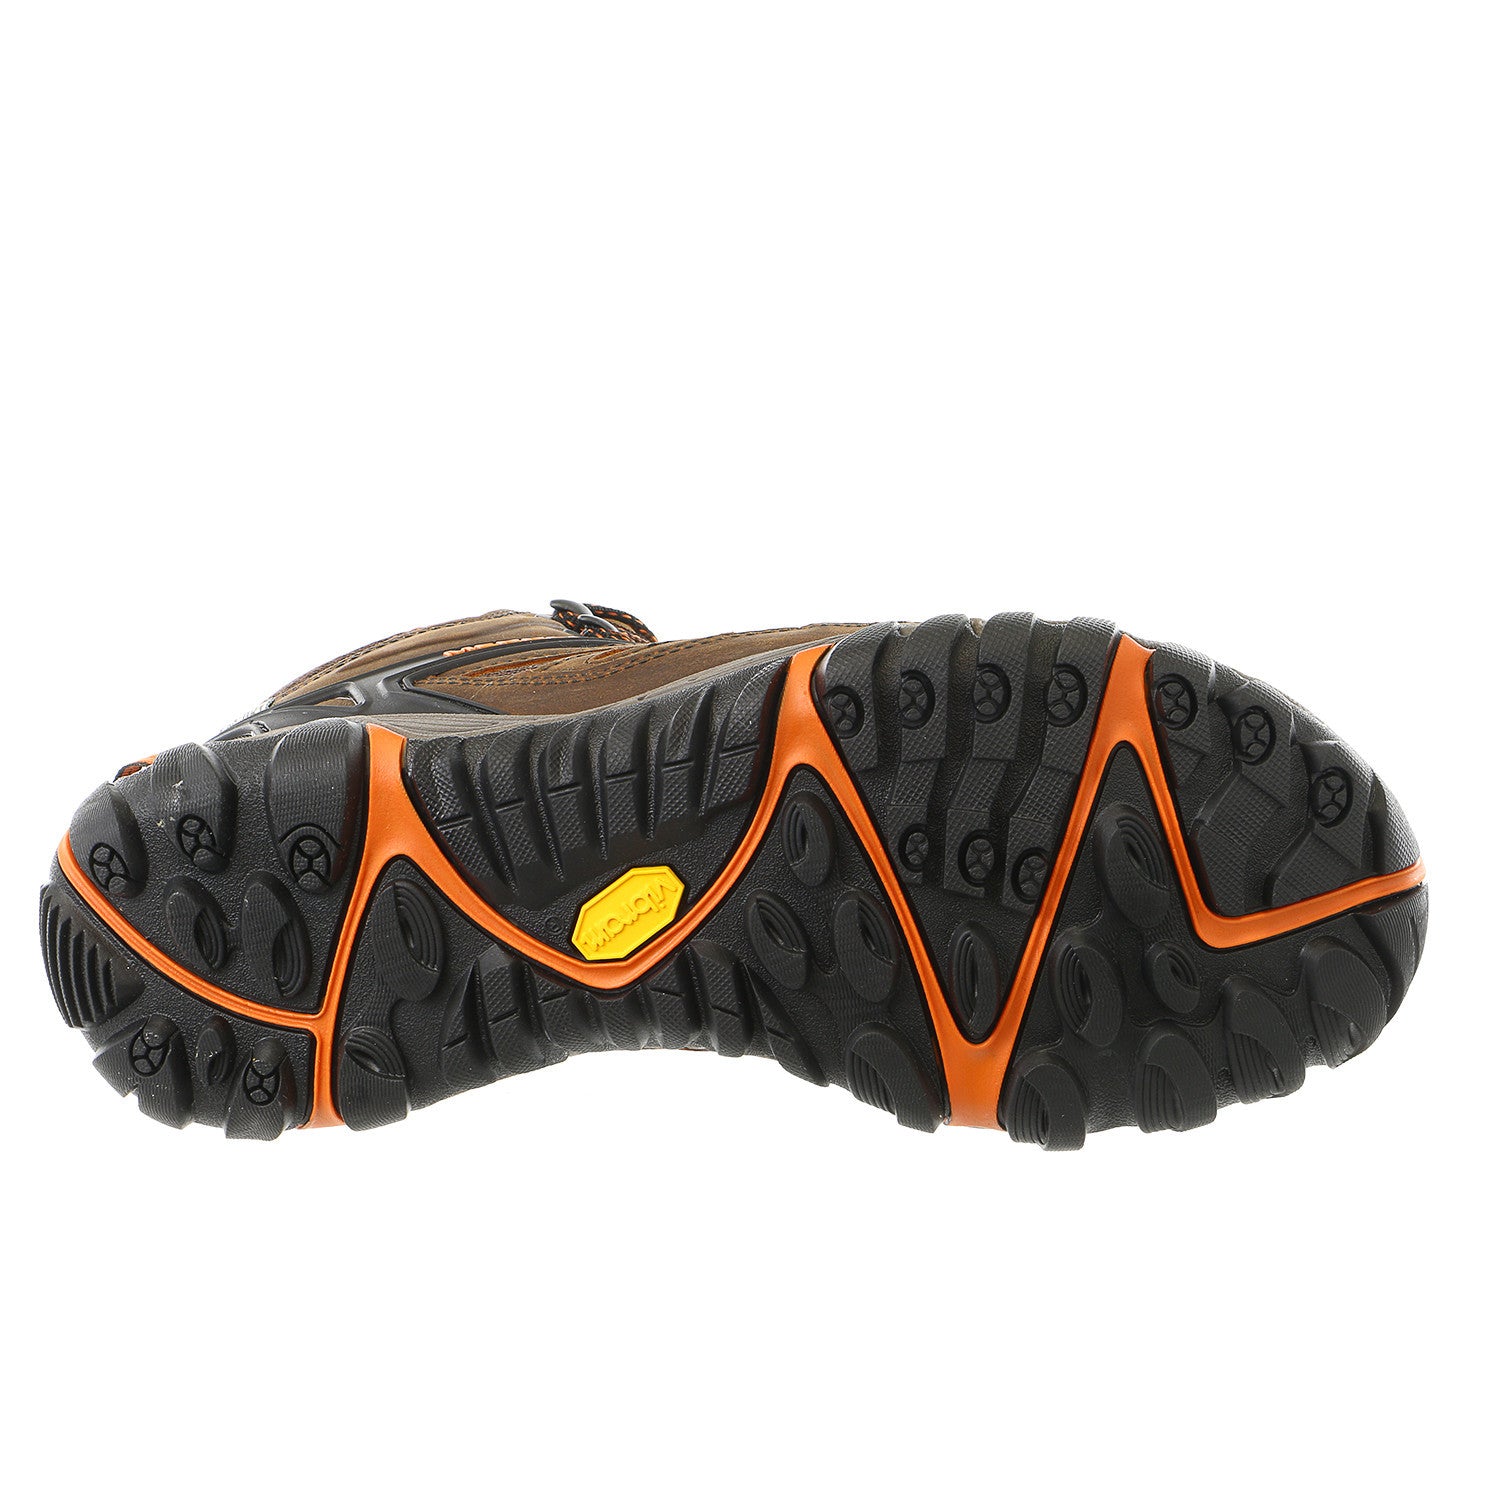 Merrell All Out Blaze Ventilator Mid Waterproof Hiking Boot Shoe - Men -  Shoplifestyle